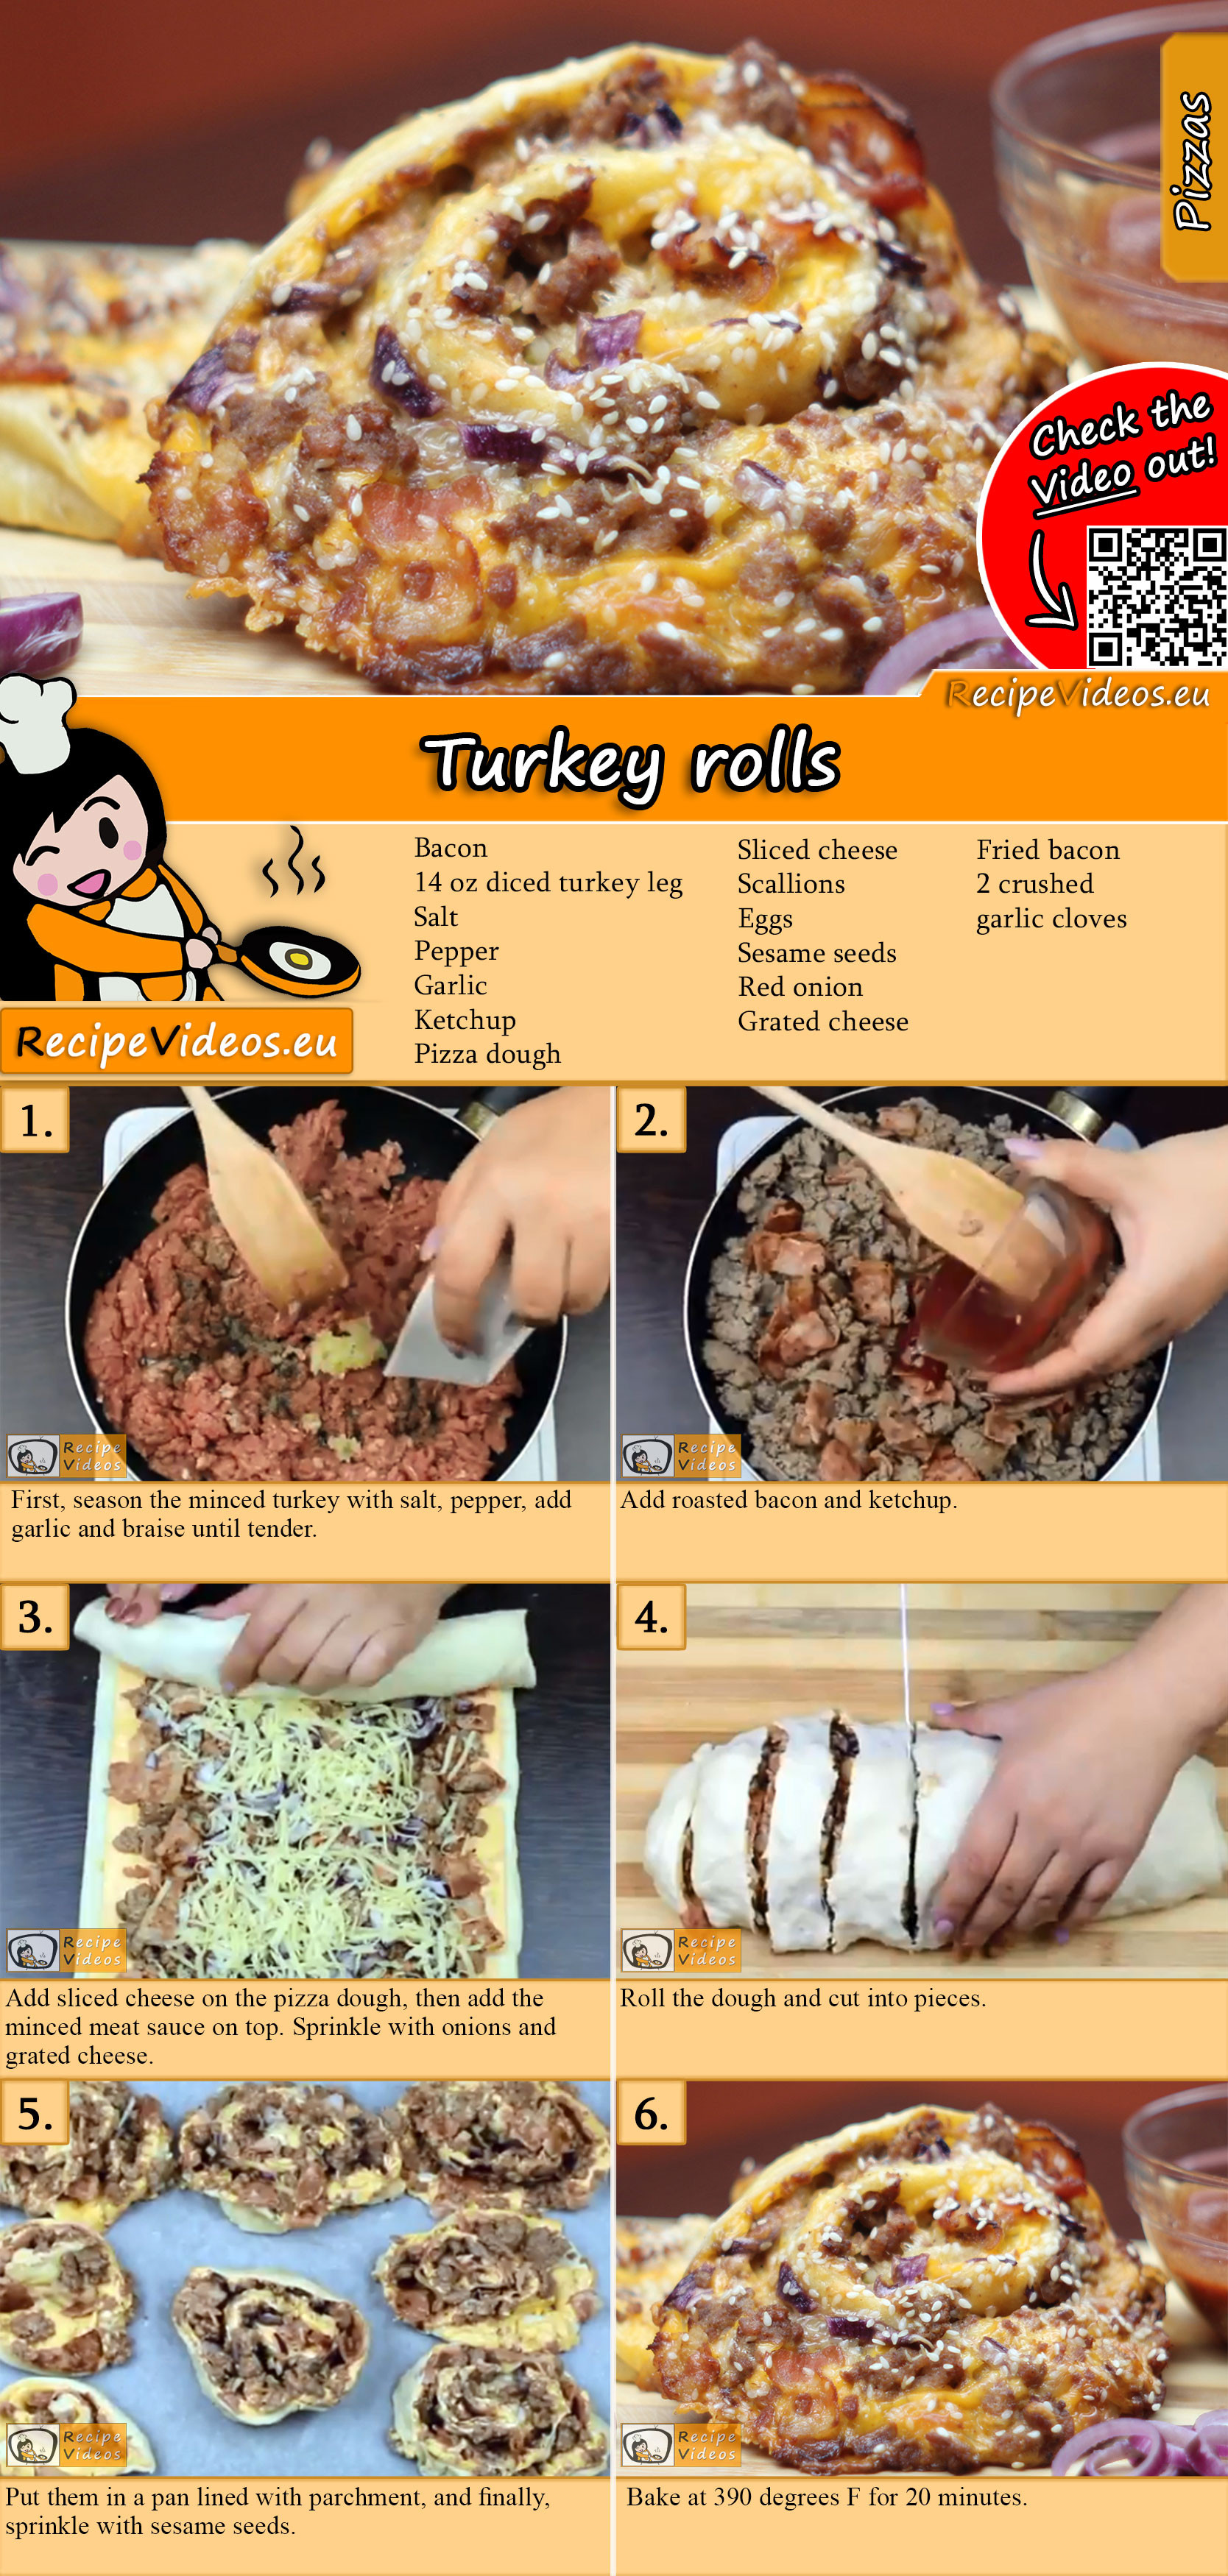 Turkey rolls recipe with video